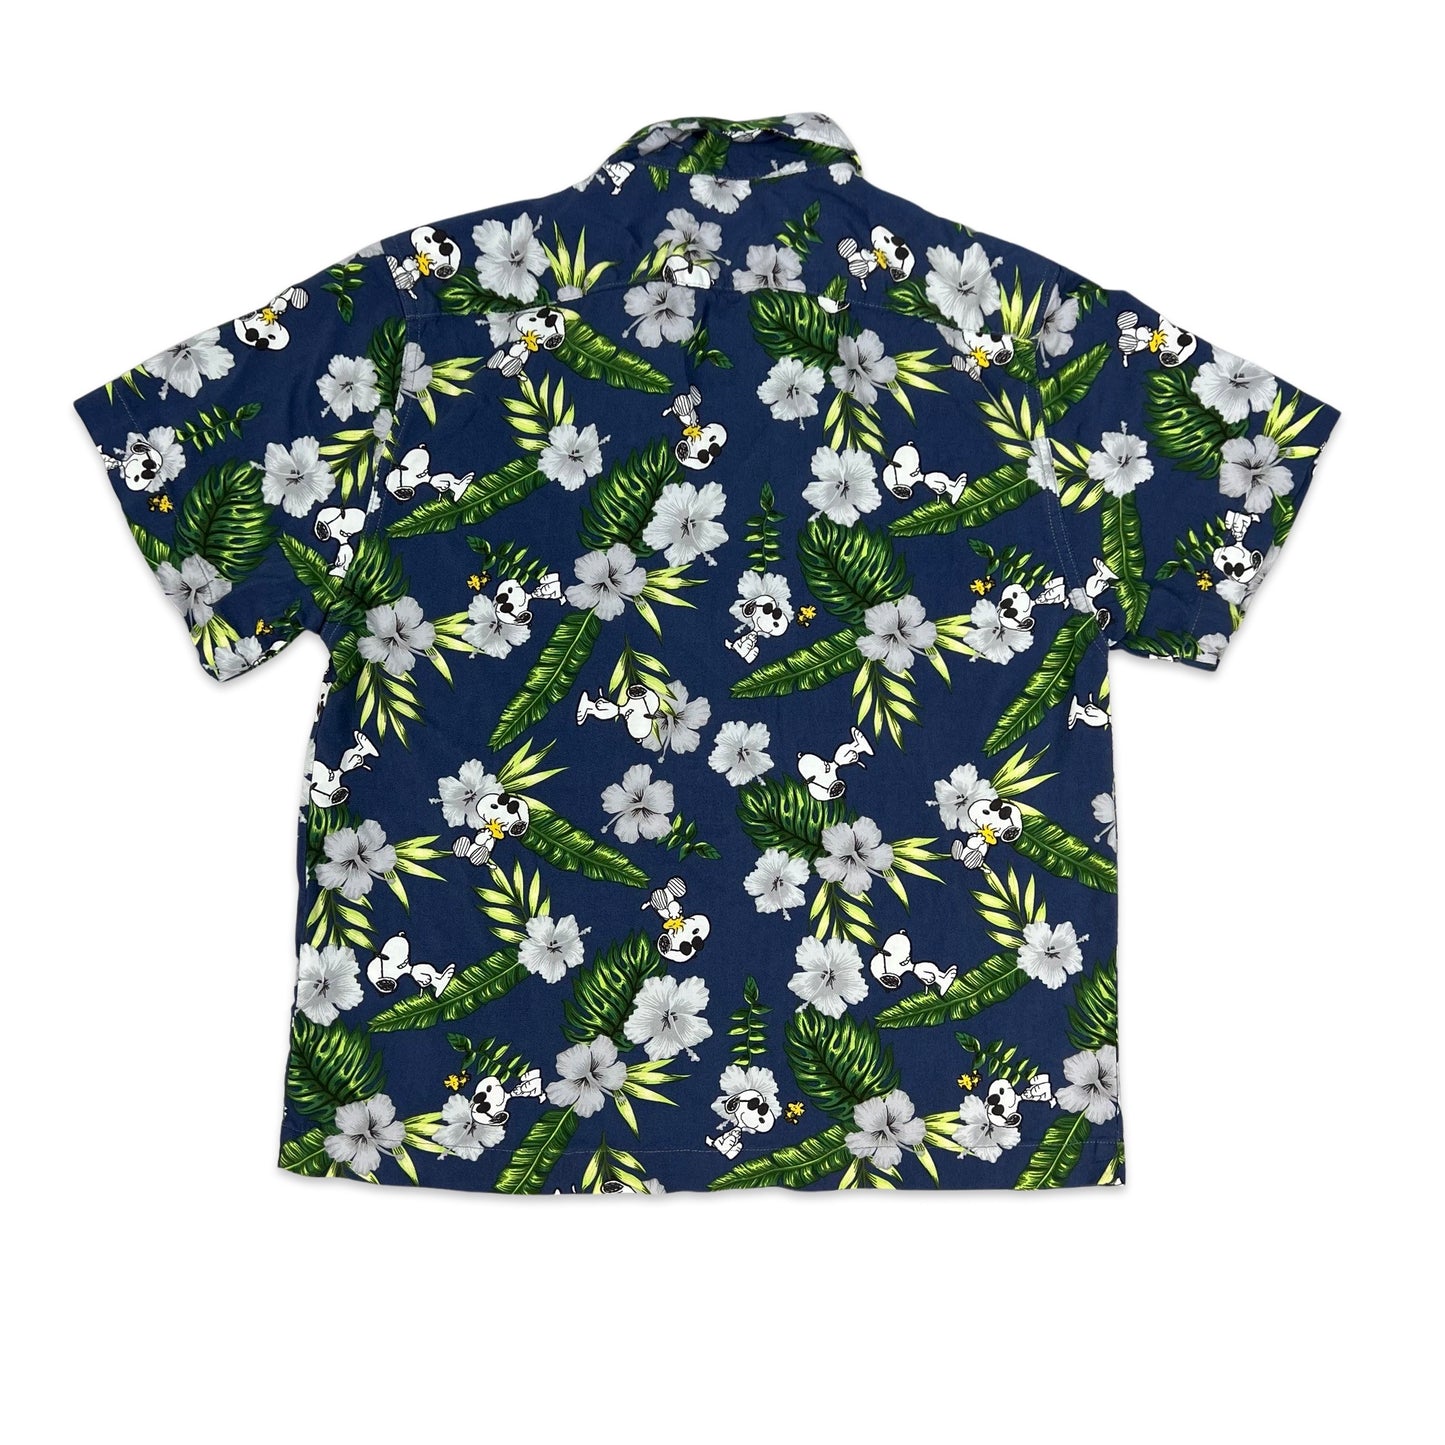 Peanuts Blue and Green Snoopy Print Hawaiian Shirt XS S